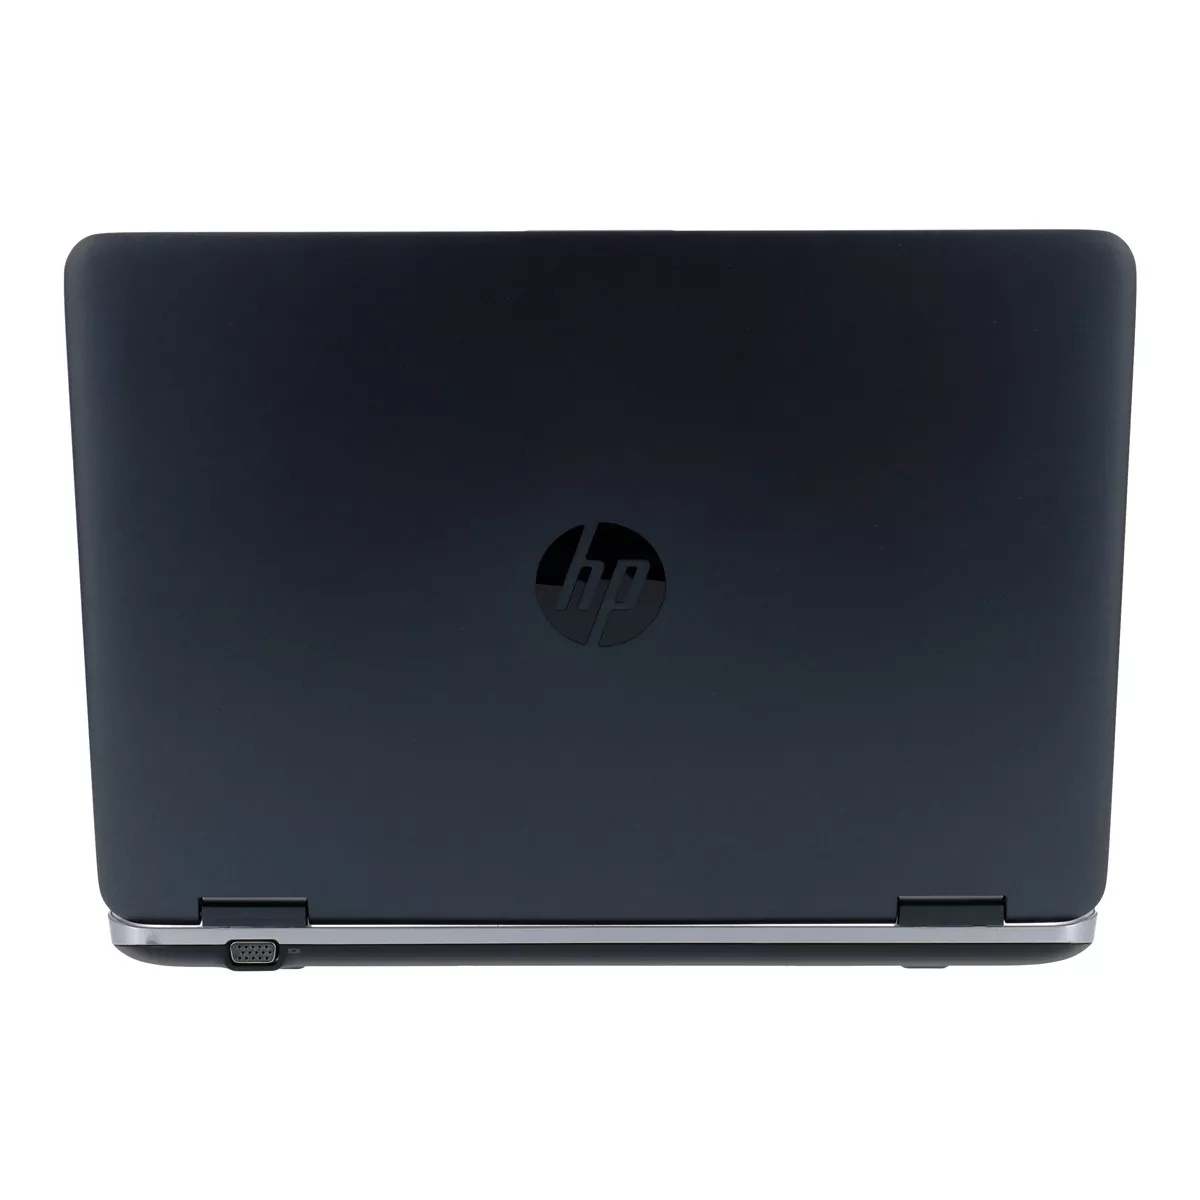 HP ProBook 640 G2 Core i5 6300U 8 GB 500 GB M.2 Webcam A+